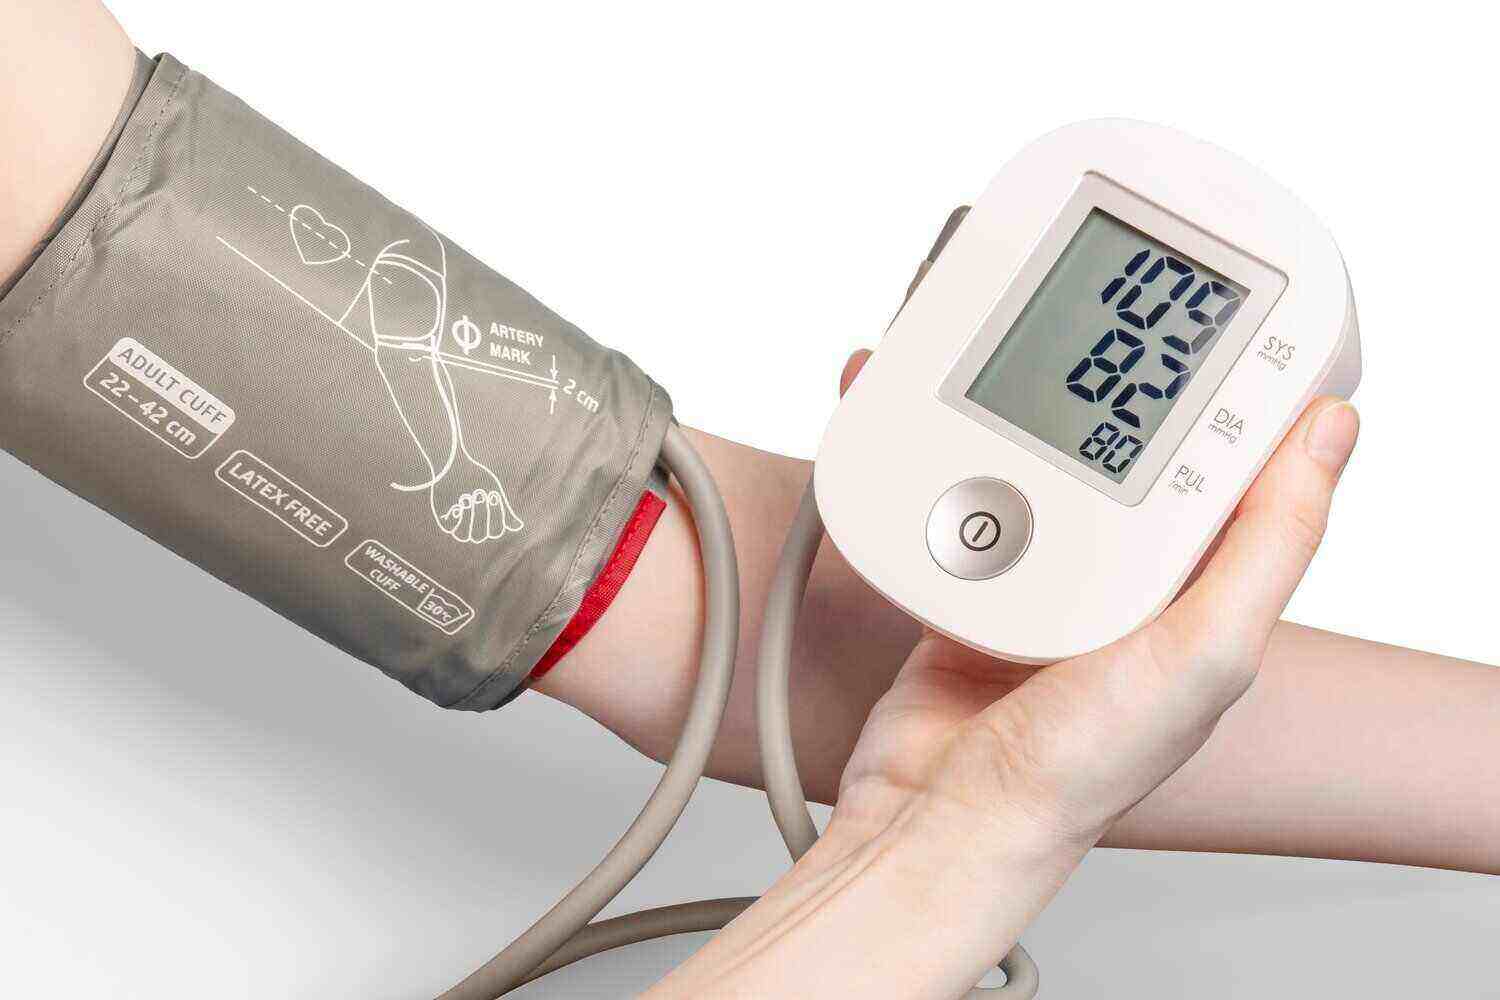 blood pressure machine checking someone's blood pressure